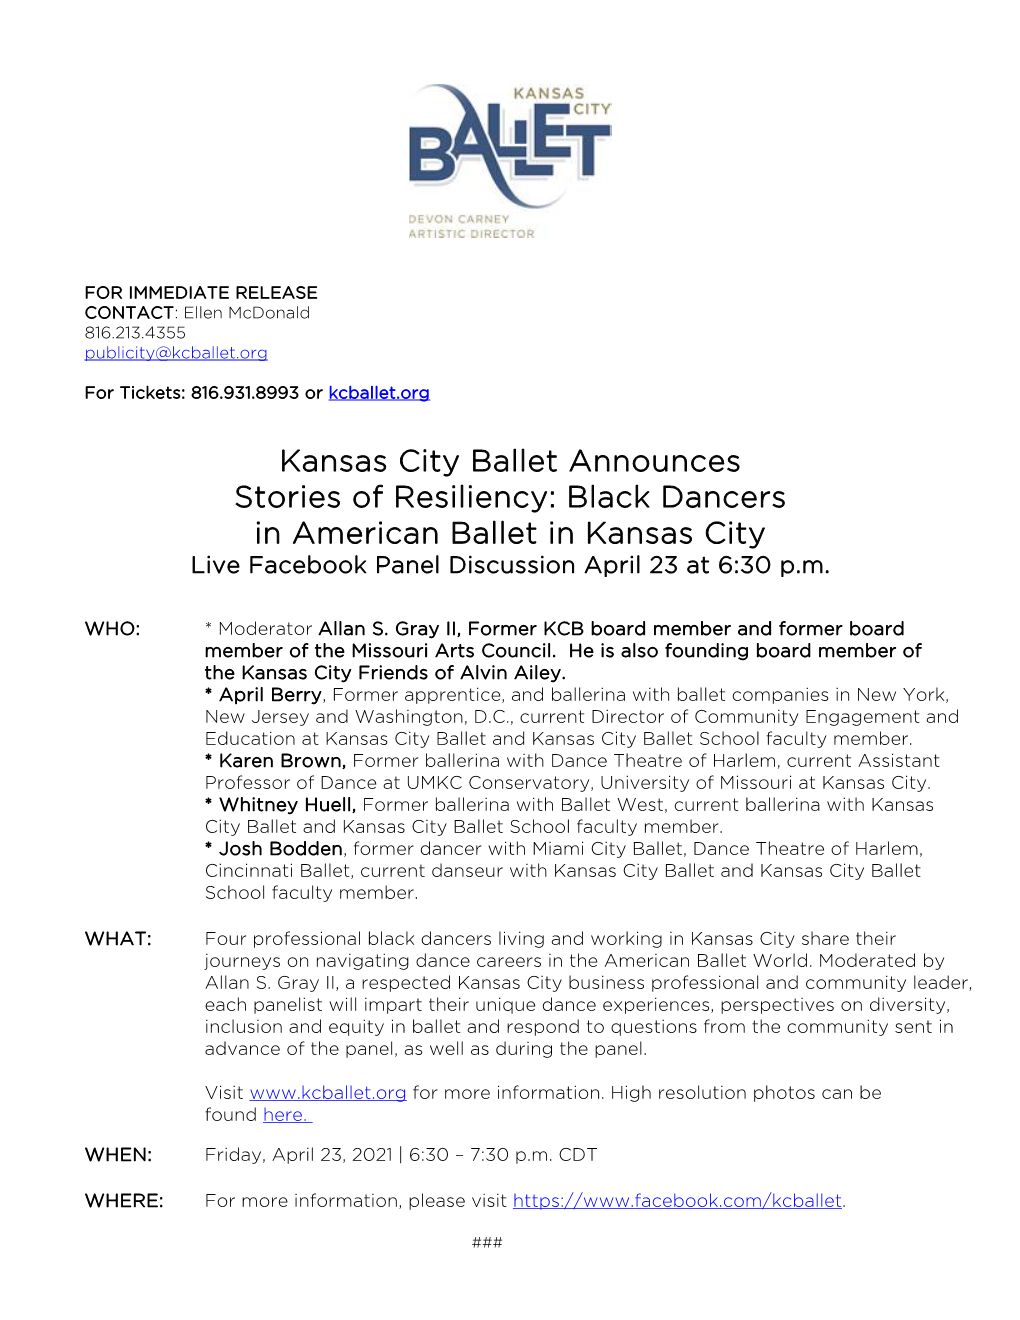 Black Dancers in American Ballet in Kansas City Live Facebook Panel Discussion April 23 at 6:30 P.M